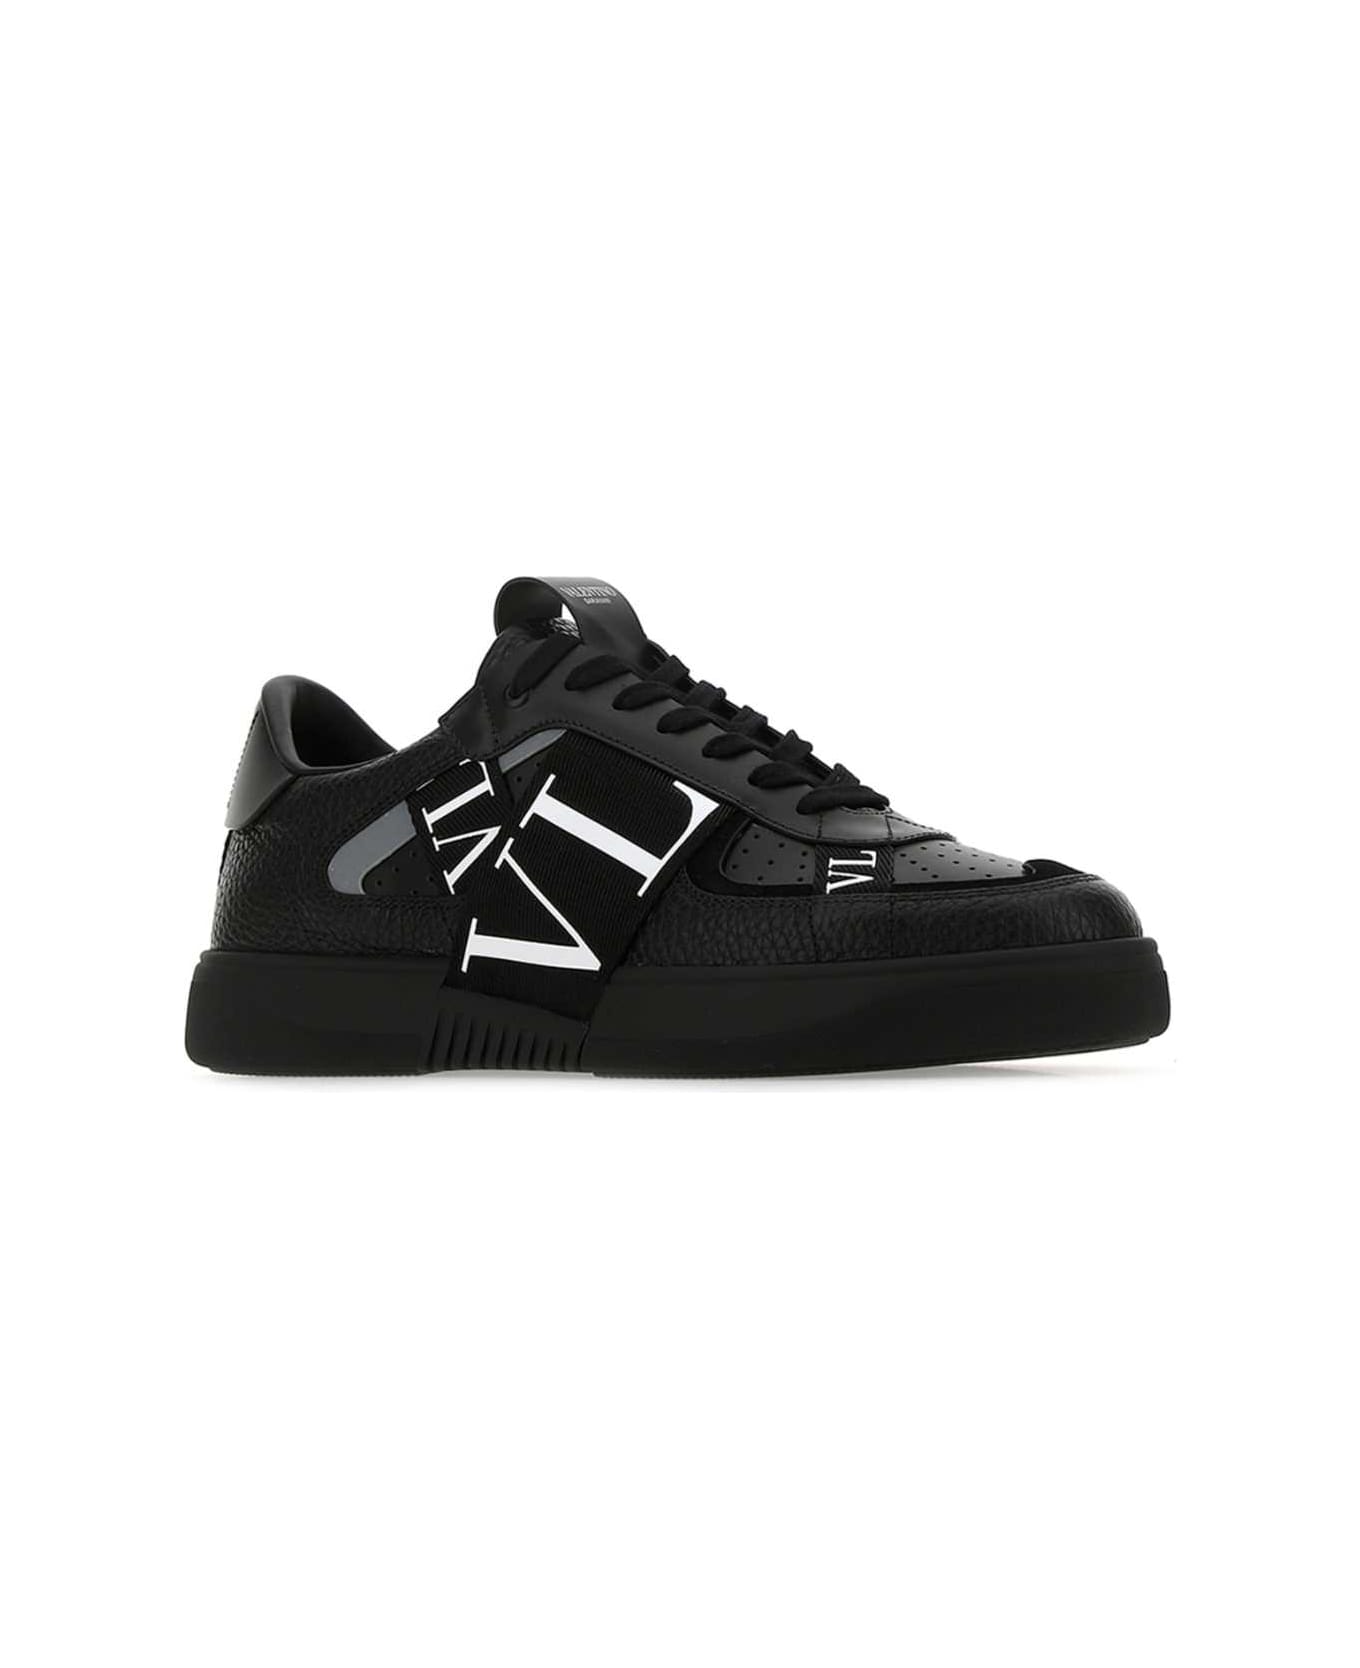 Valentino Garavani Black Leather Vl7n Sneakers - NERO